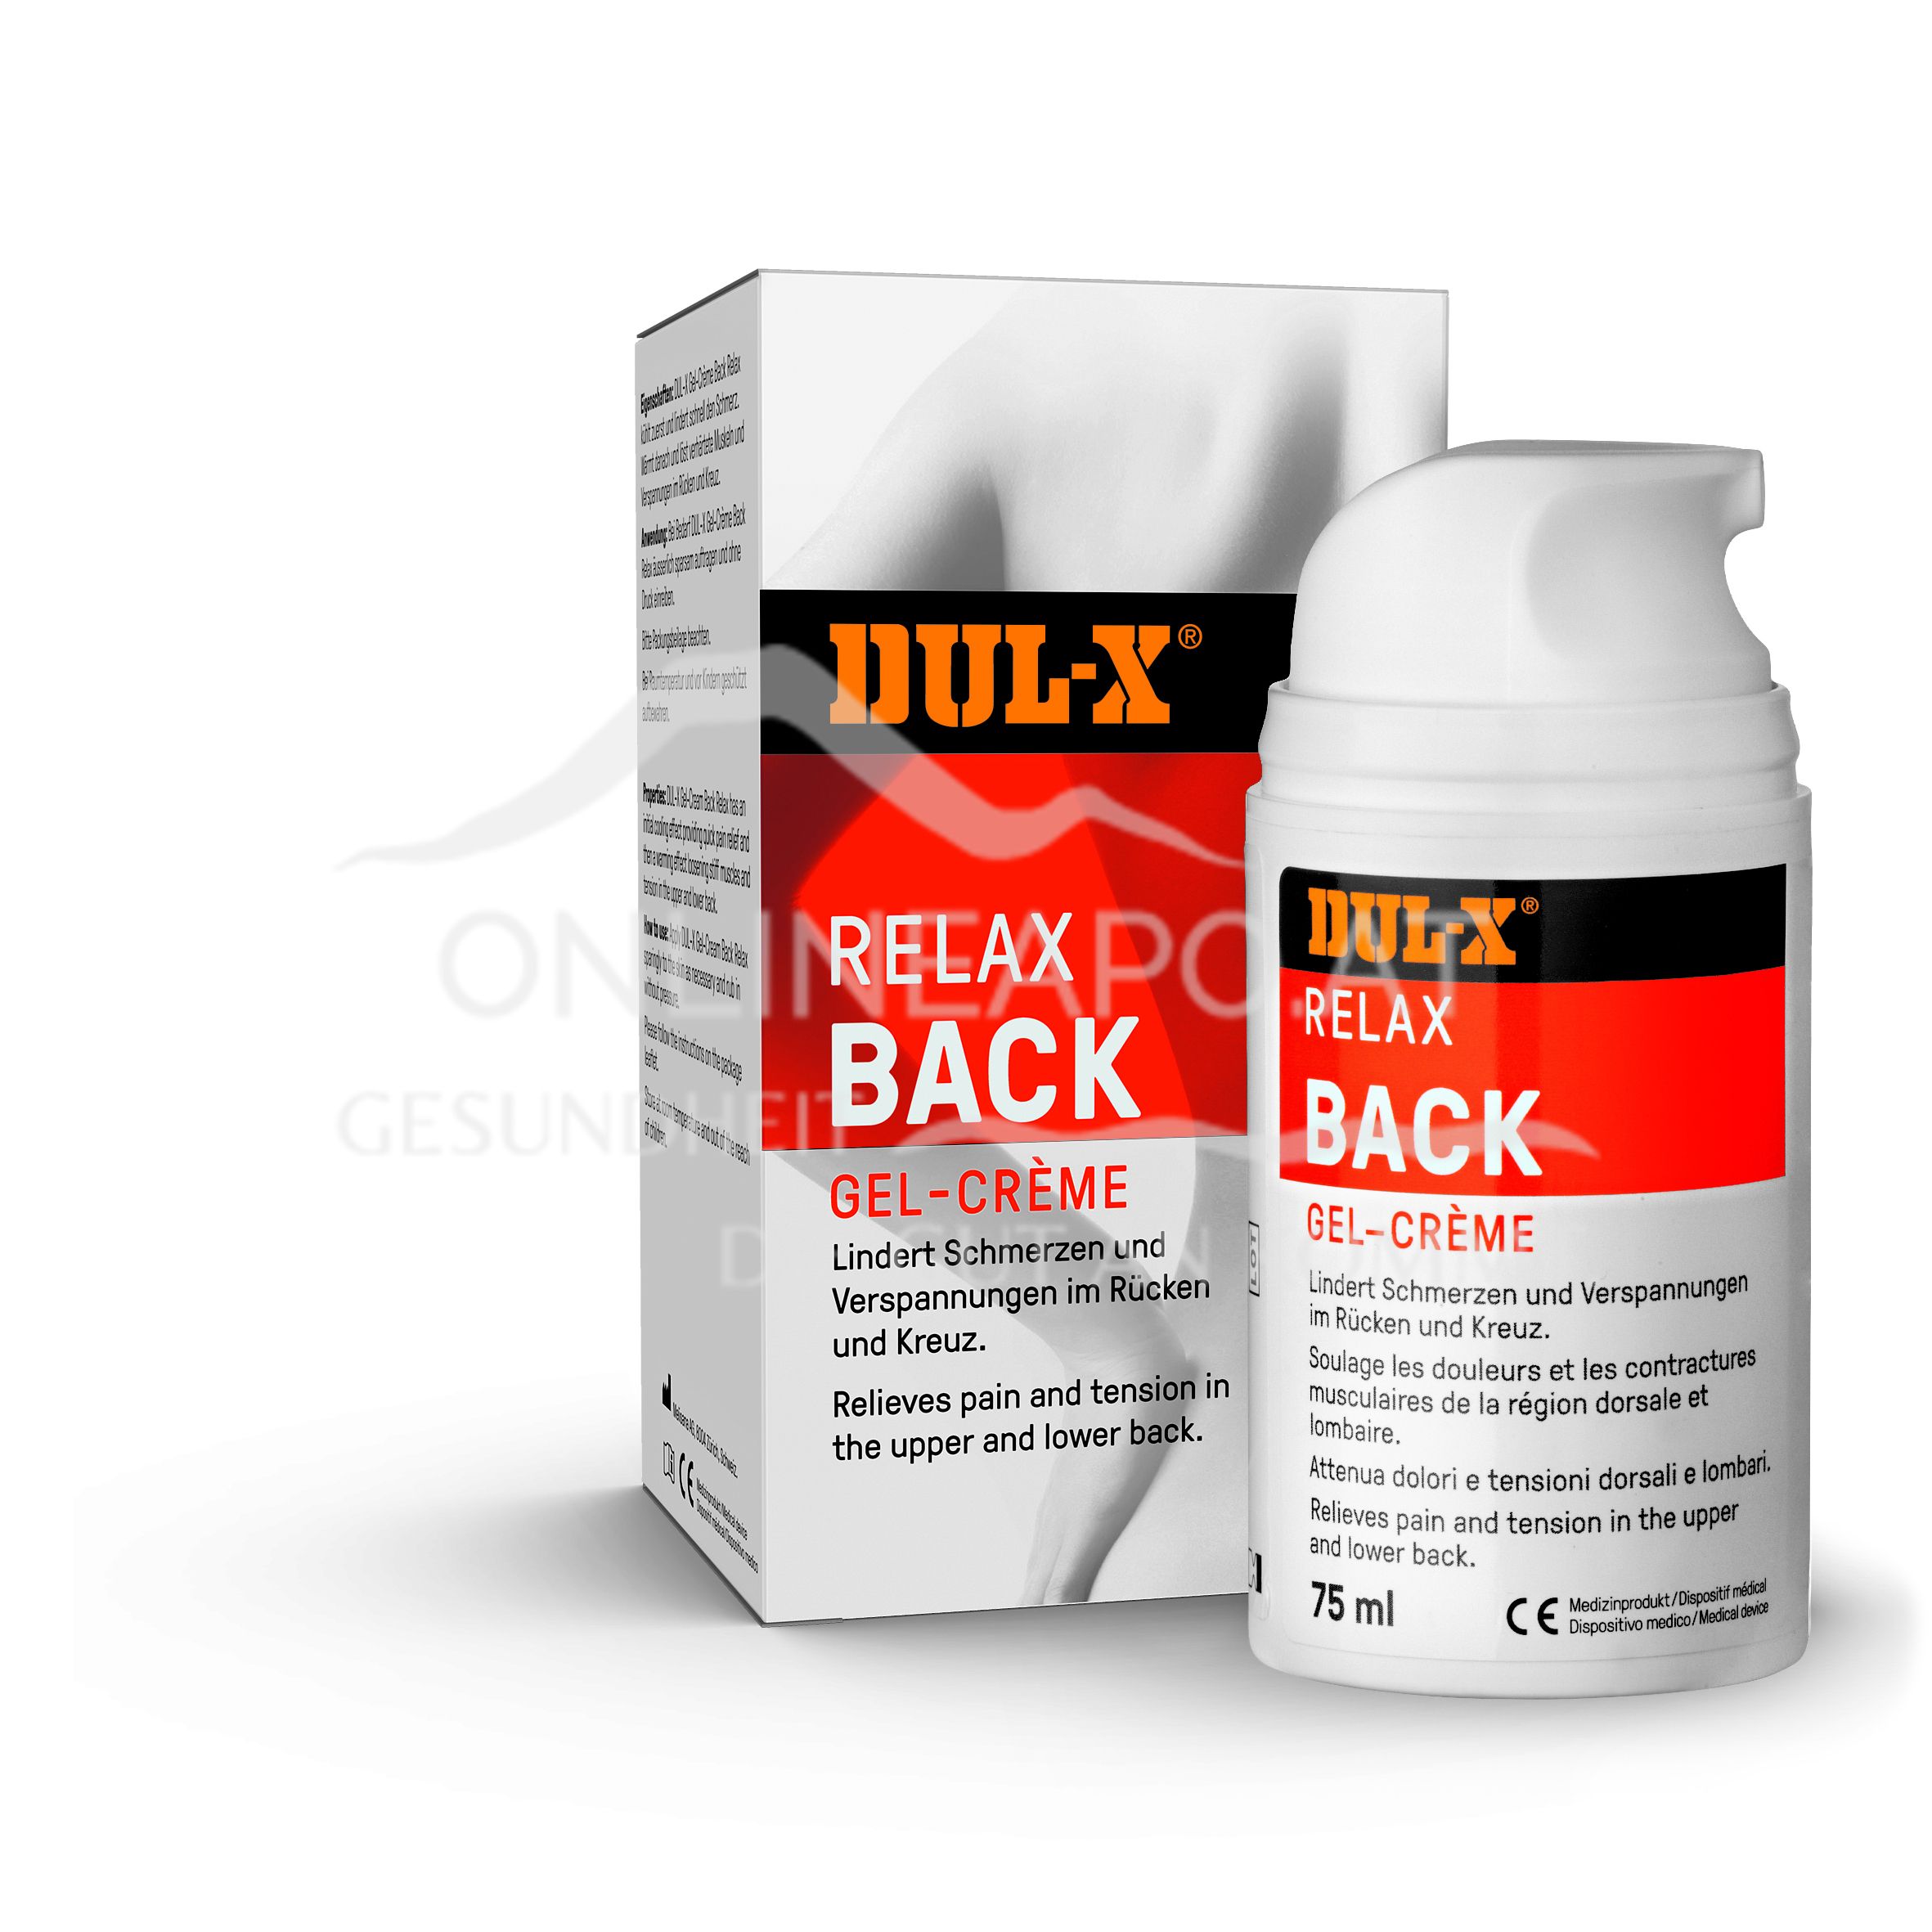 DUL-X® Gel-Crème Back Relax